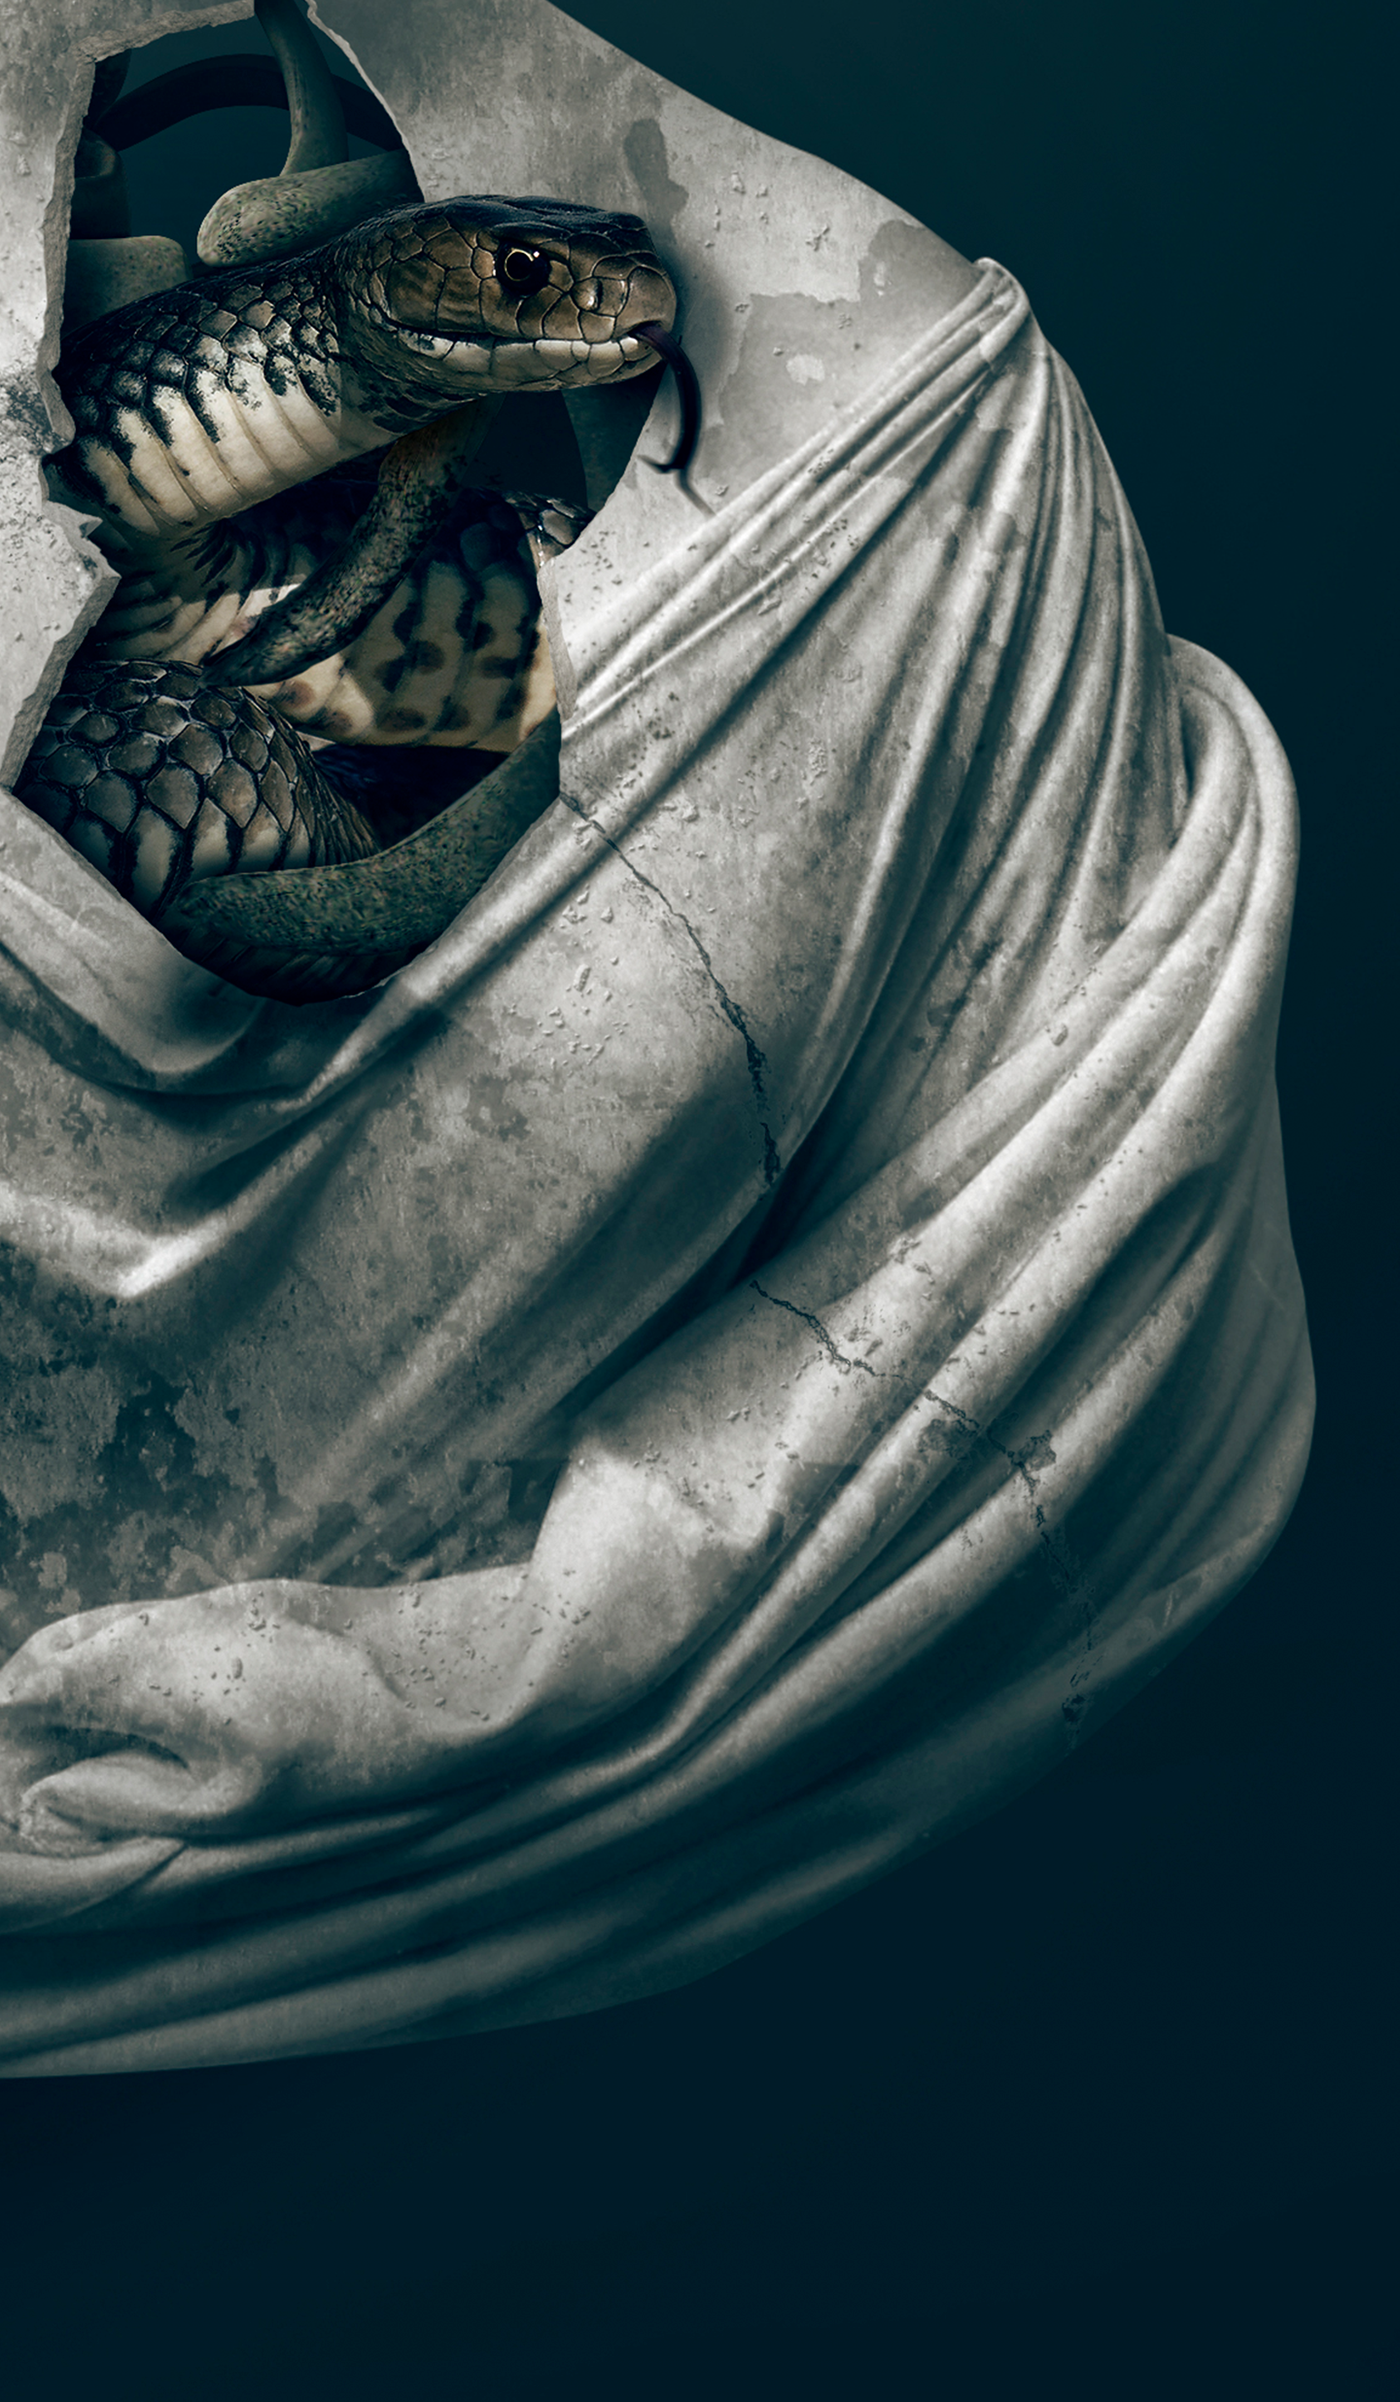 mosul statue snake raven butterfly photoshop broken Digital Art  compositing Photo Manipulation 